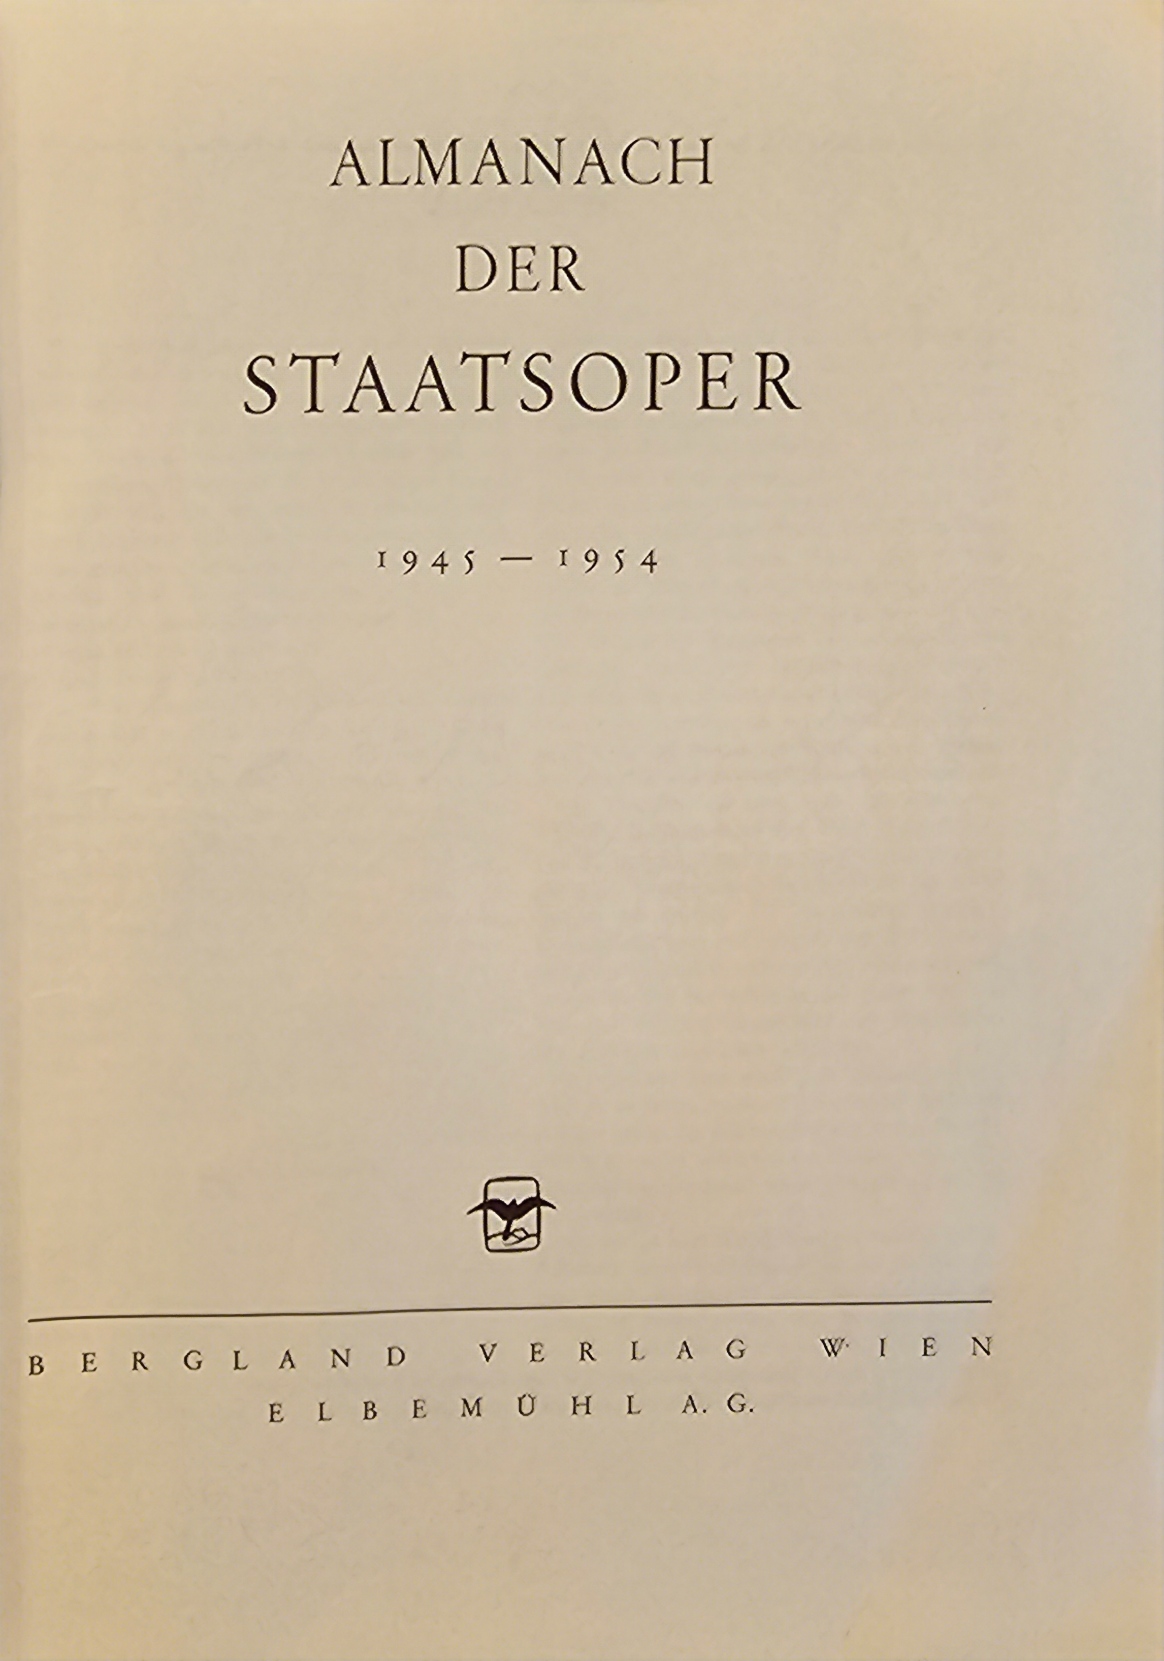 Almanach der Staatsoper 1945-1954.jpg